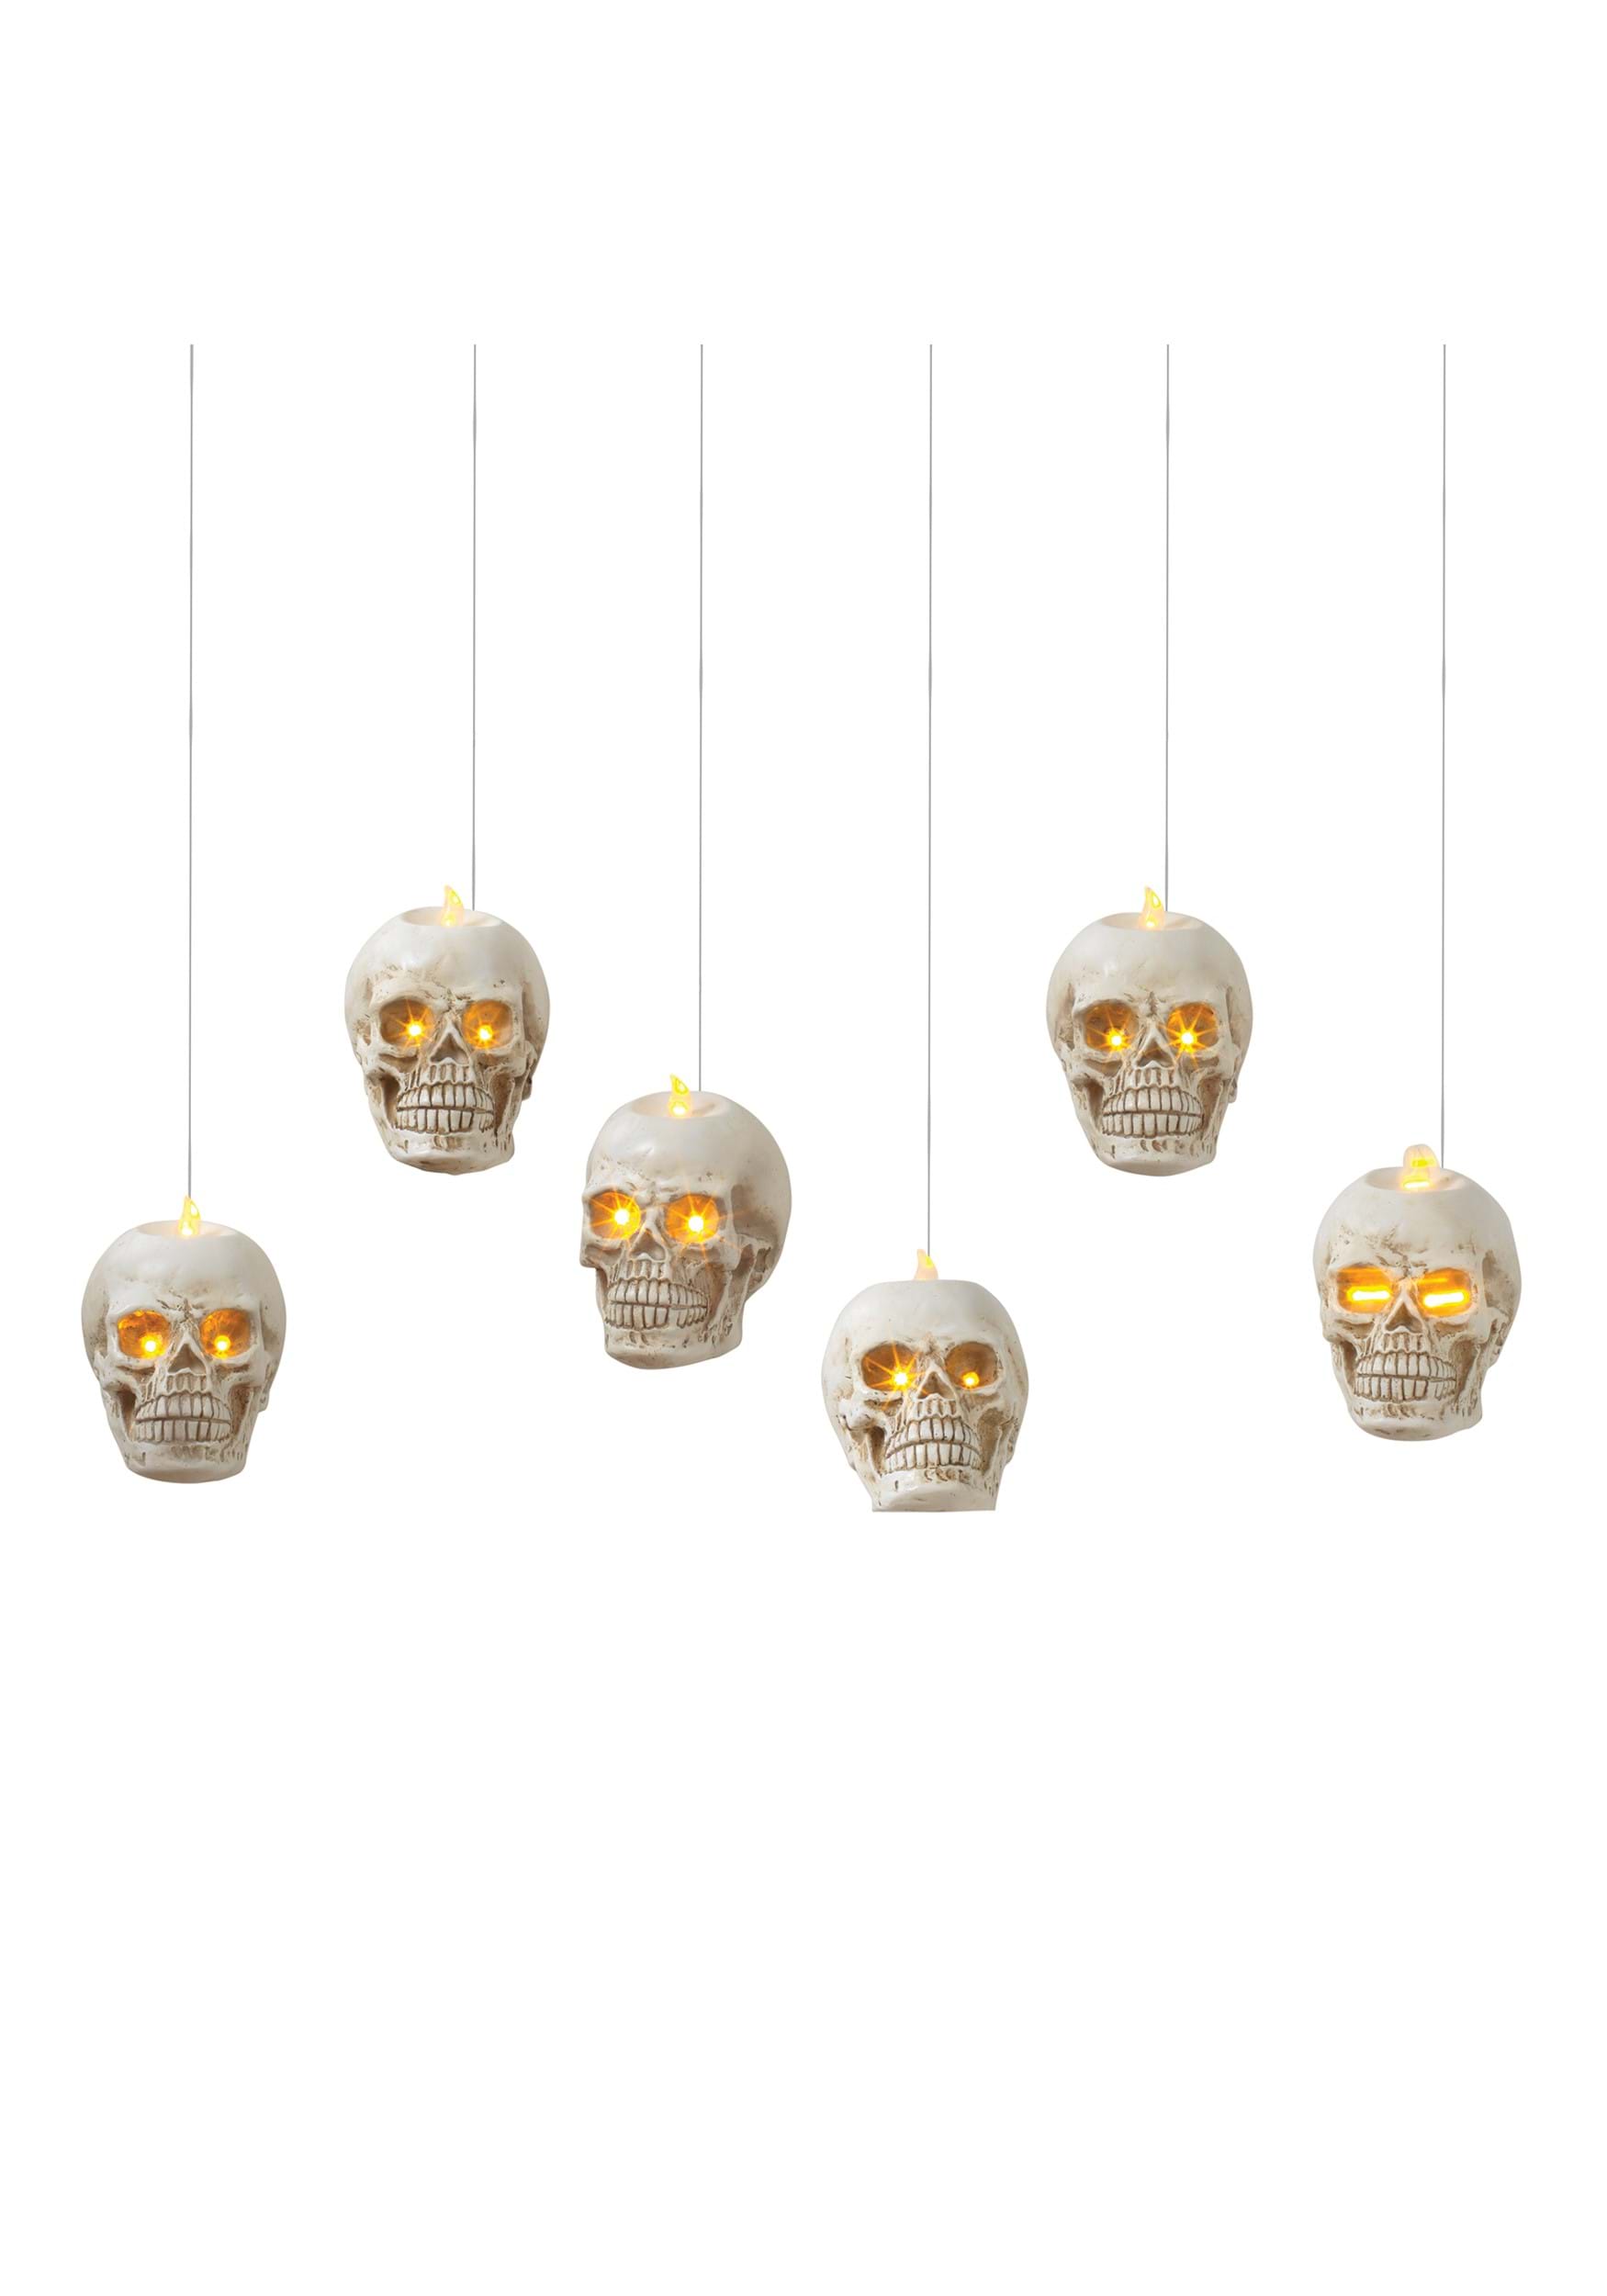 6 Hanging Light Up Skulls Prop With Remote Control , Halloween Lights